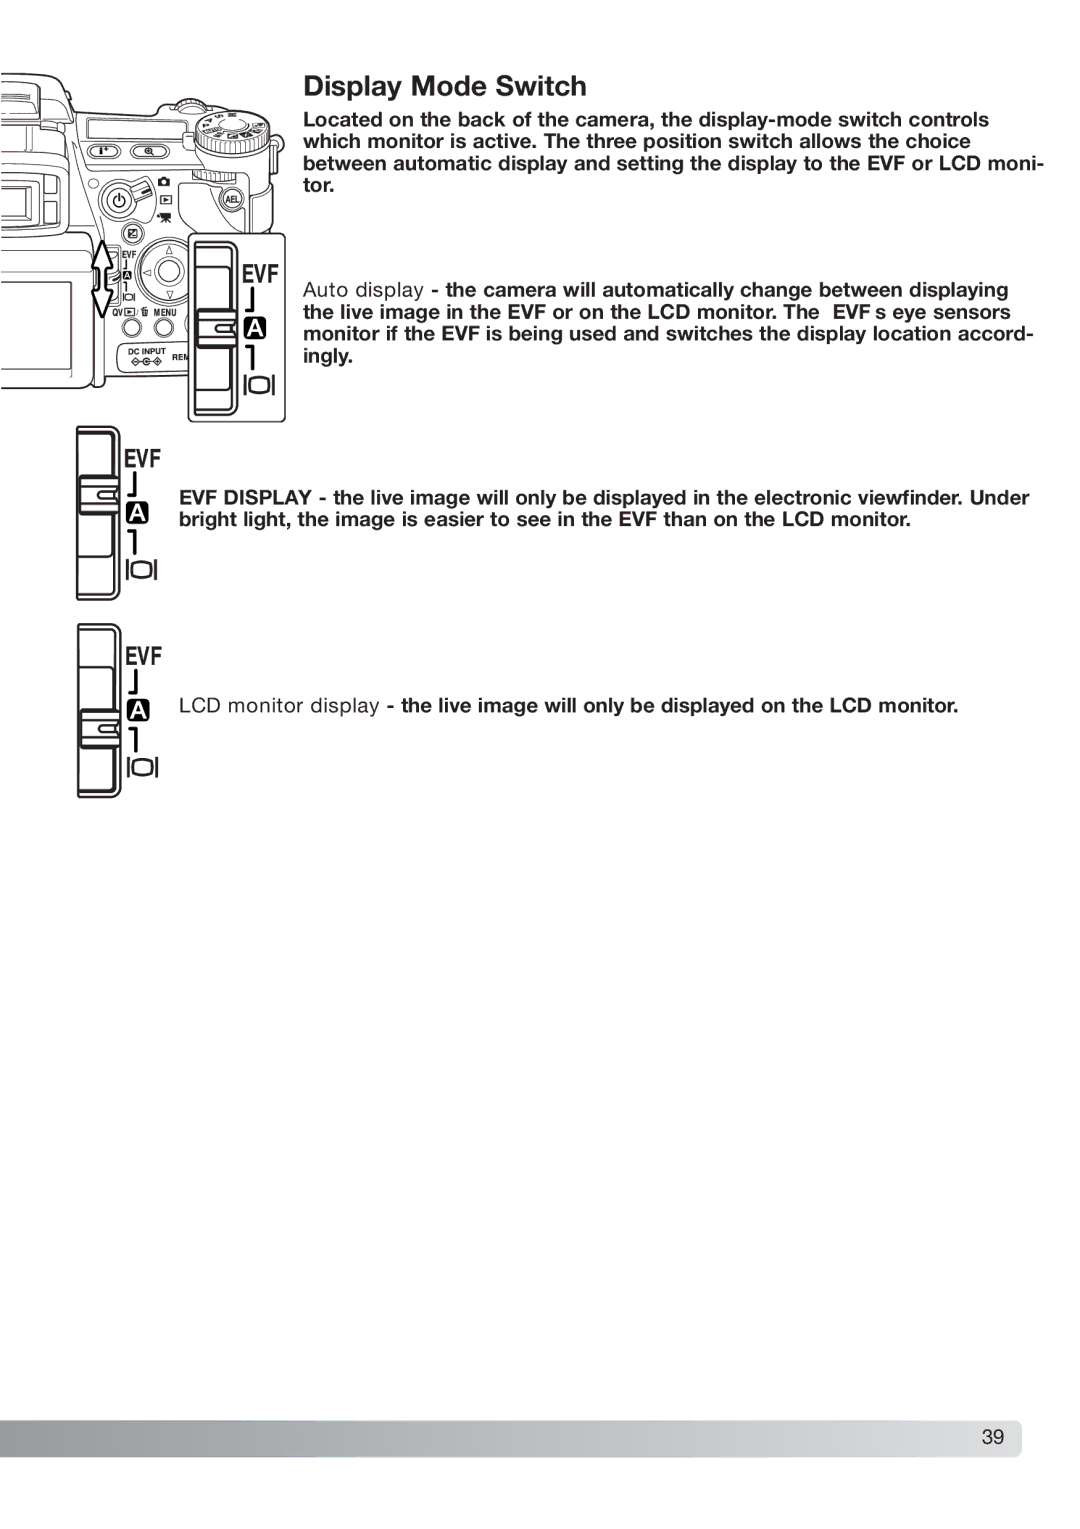 Konica Minolta DiMAGE_A2 instruction manual Display Mode Switch 